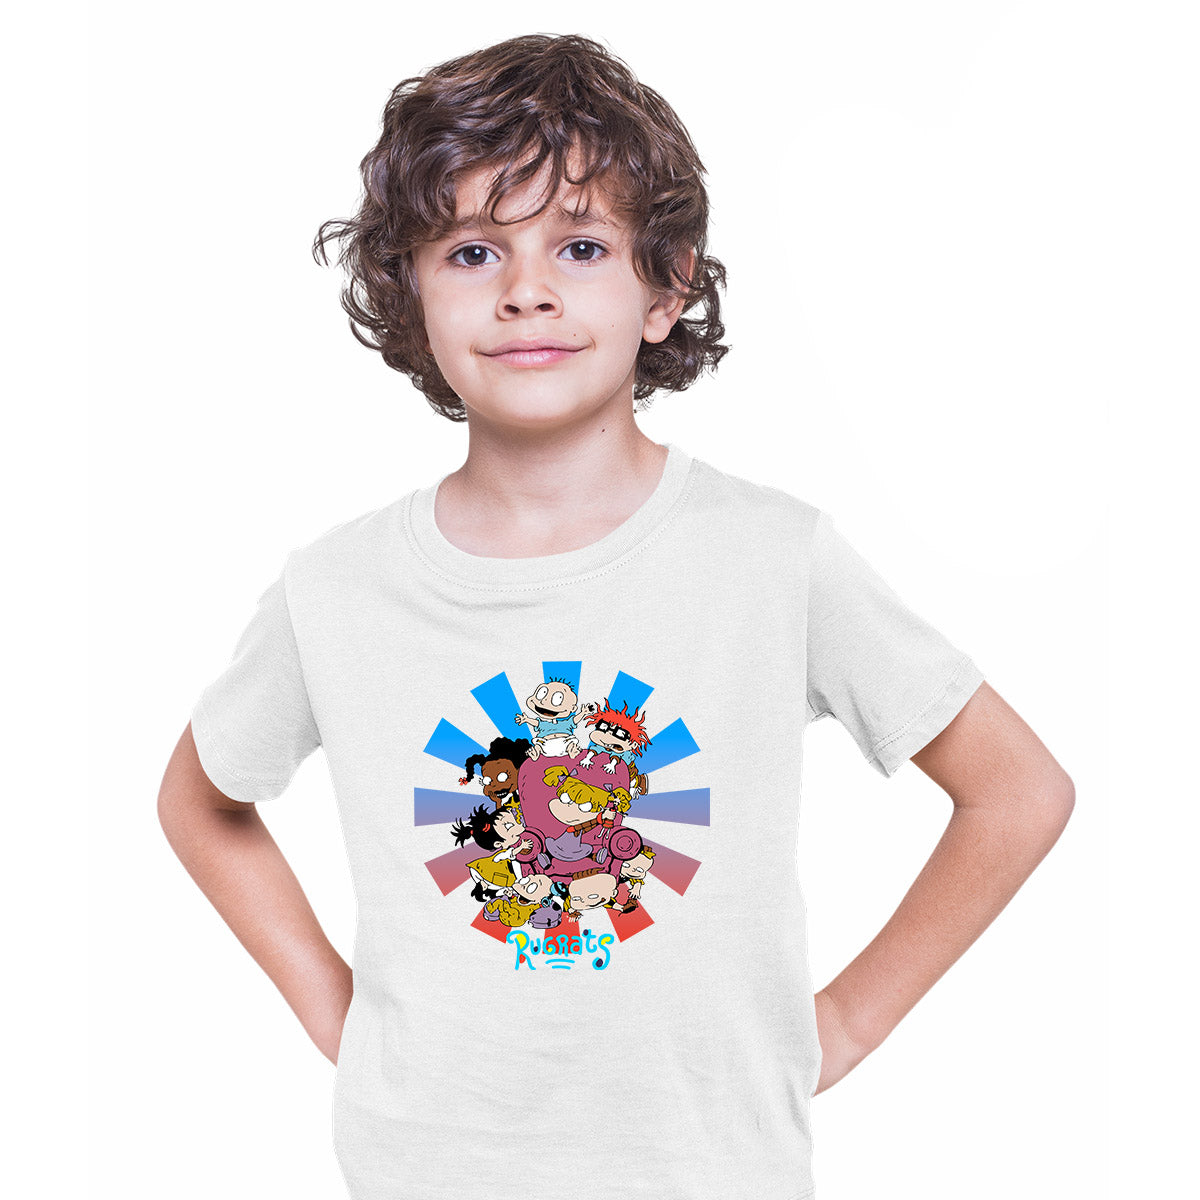 Rugrats Characters Nickelodeon TV Show Kids T-shirt White